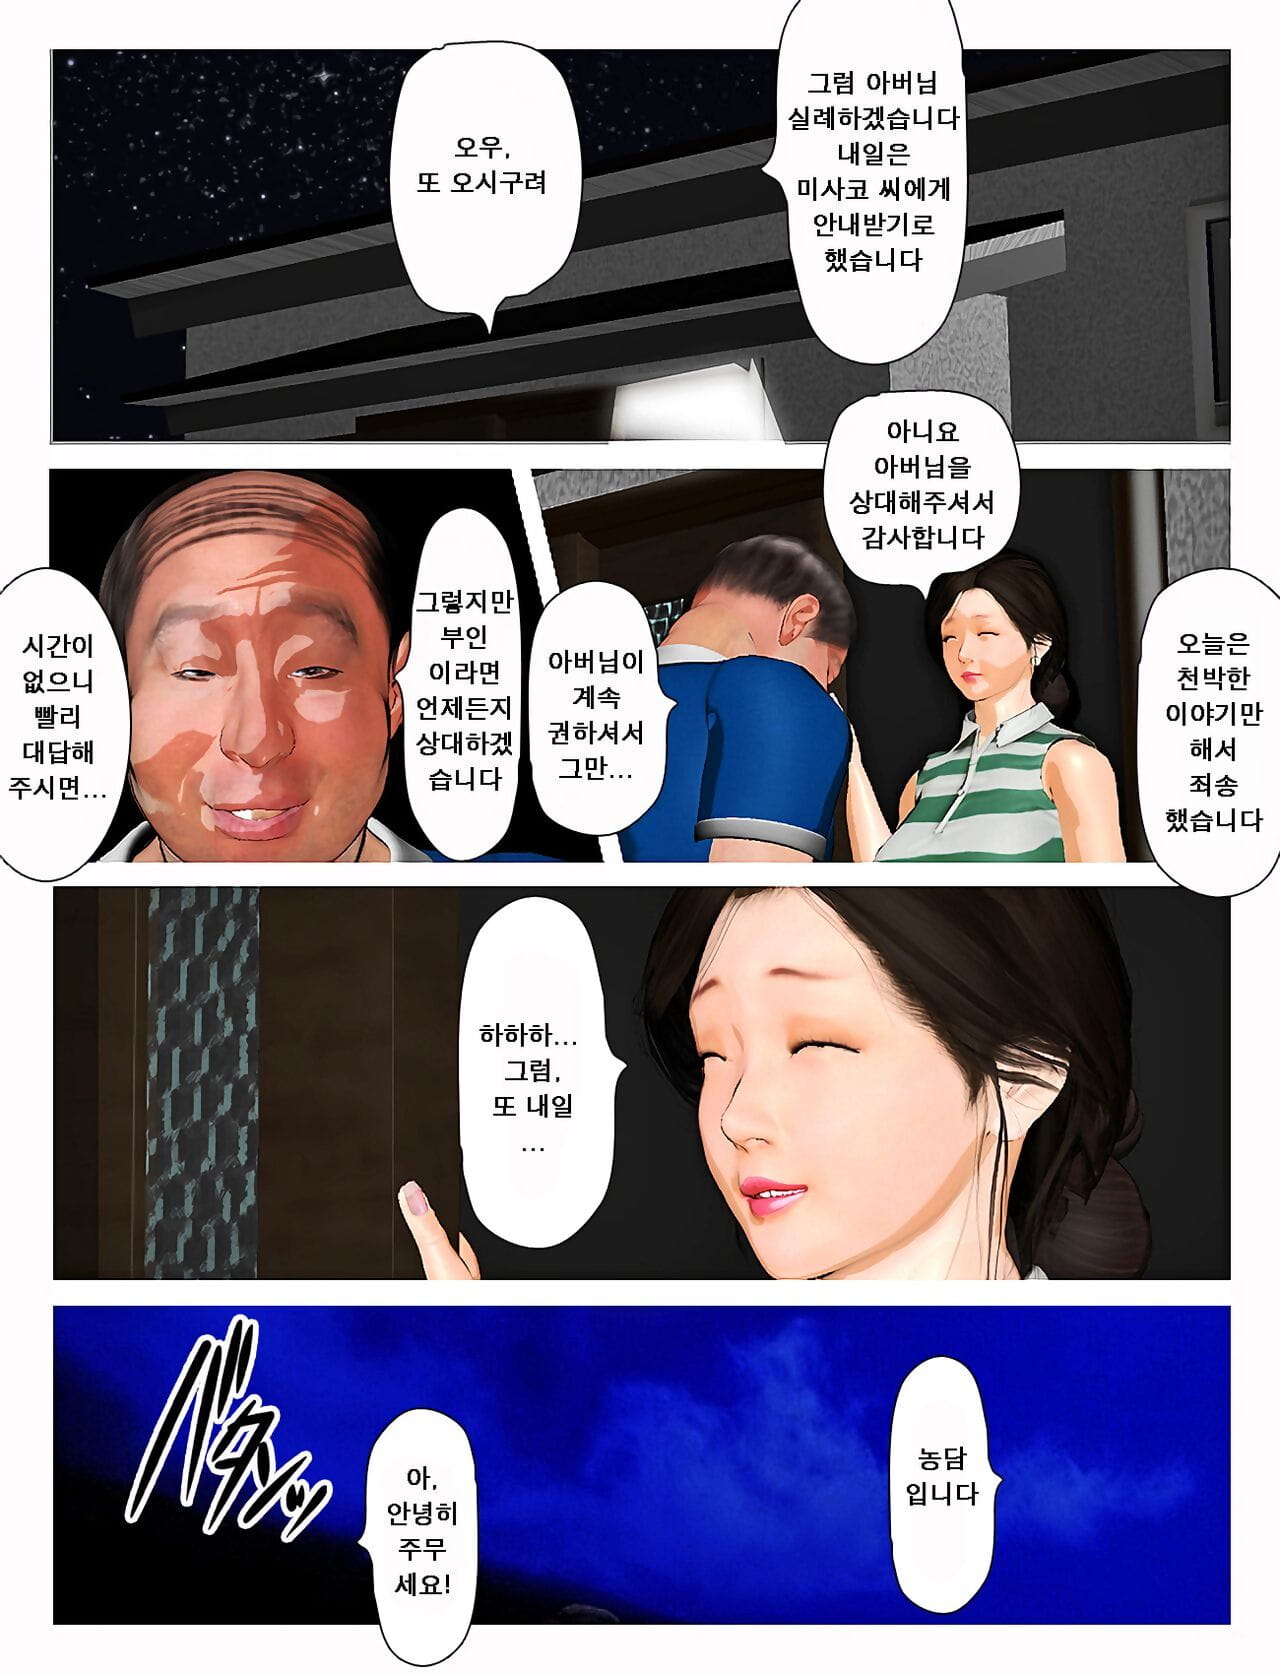 Kyou ไม่ misako ของเดือนมุฮัรร็อม 2019:2 오늘의 미사코씨 2019:2 page 1